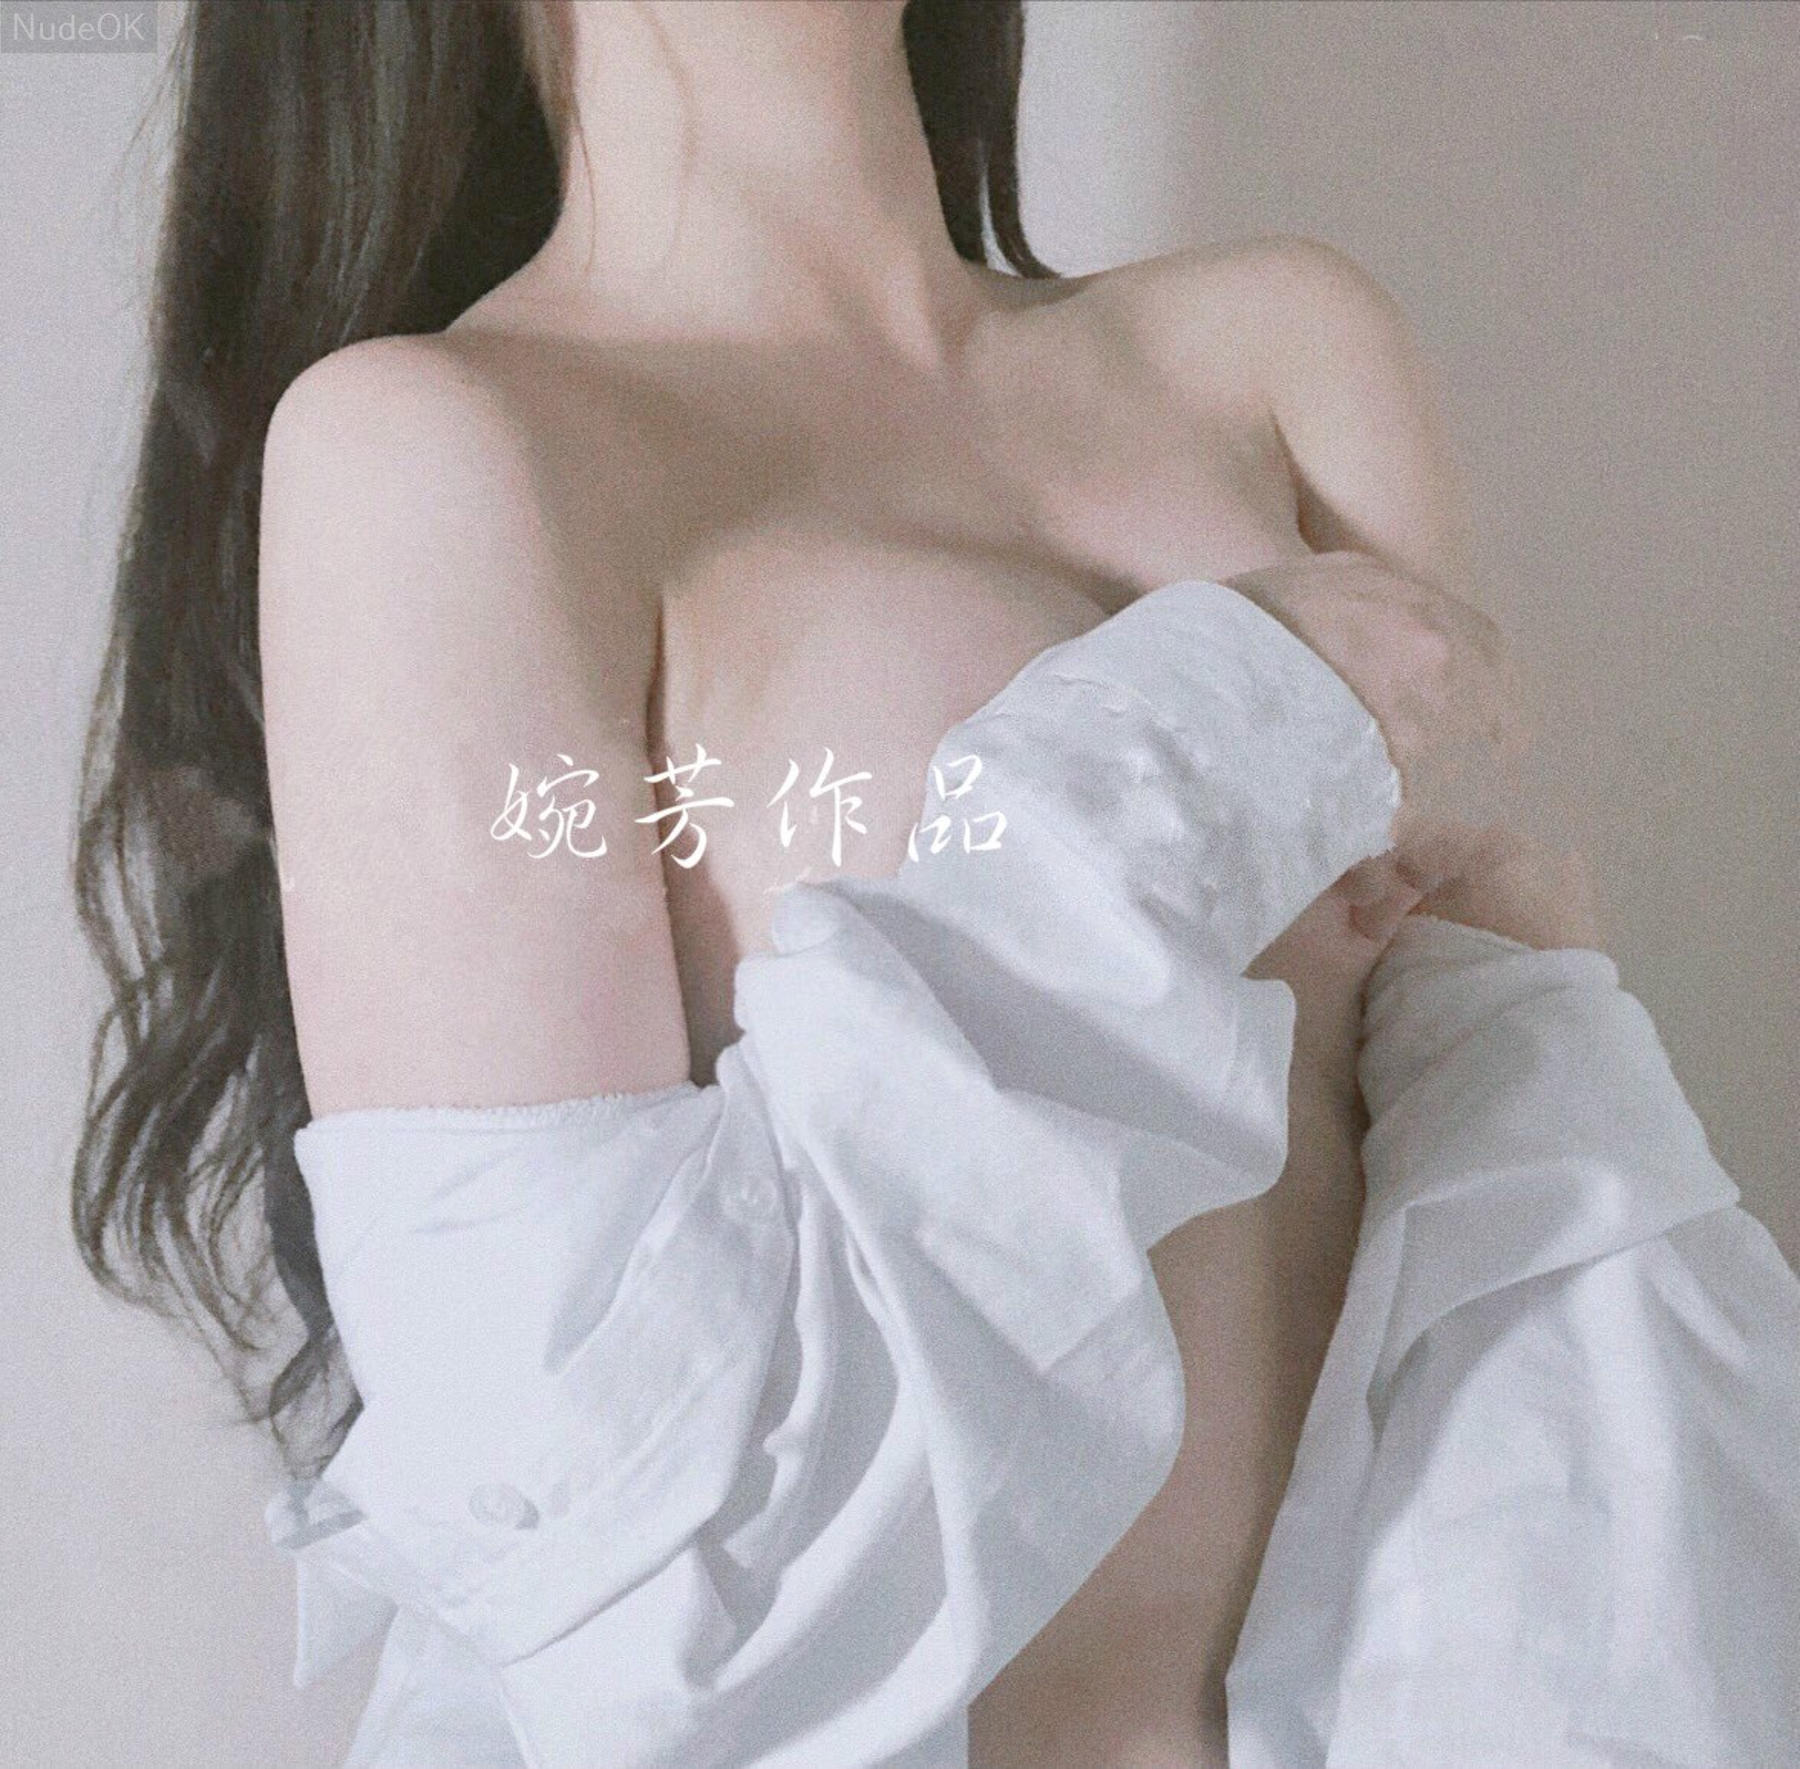 NudeOK.Com - सेक्सी सुंदर लड़की - नग्न शरीर - छाती हस्तमैथुन योनी - स्तन